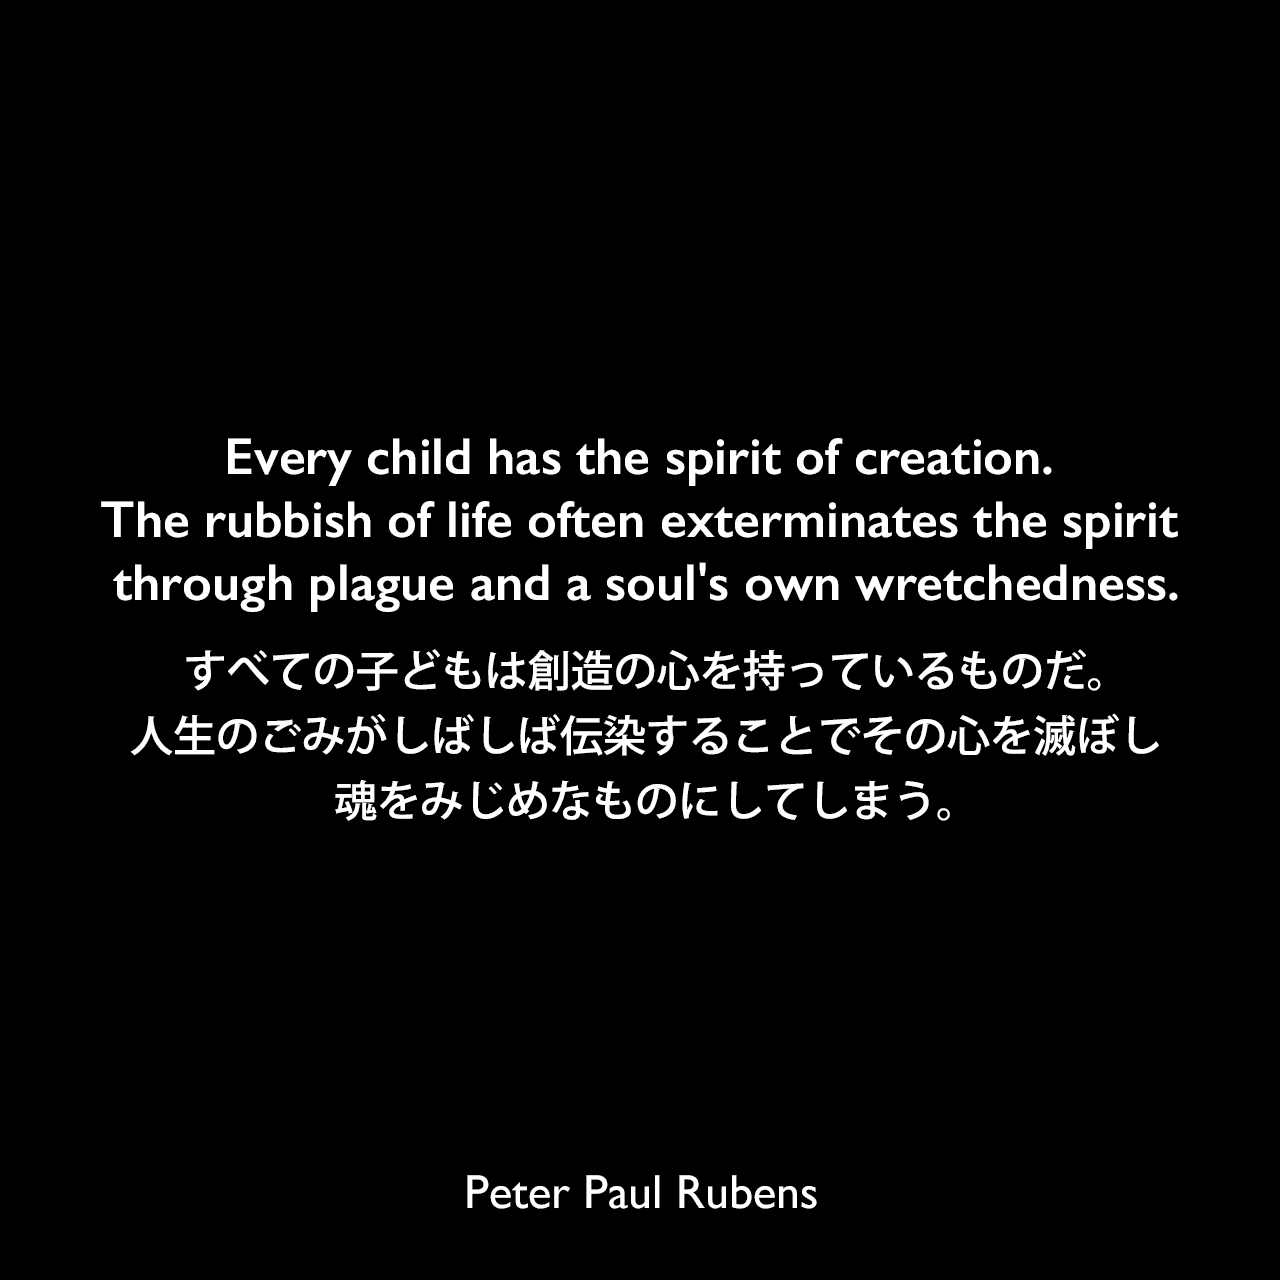 Every child has the spirit of creation. The rubbish of life often exterminates the spirit through plague and a soul's own wretchedness.すべての子どもは創造の心を持っているものだ。人生のごみがしばしば伝染することでその心を滅ぼし、魂をみじめなものにしてしまう。Peter Paul Rubens